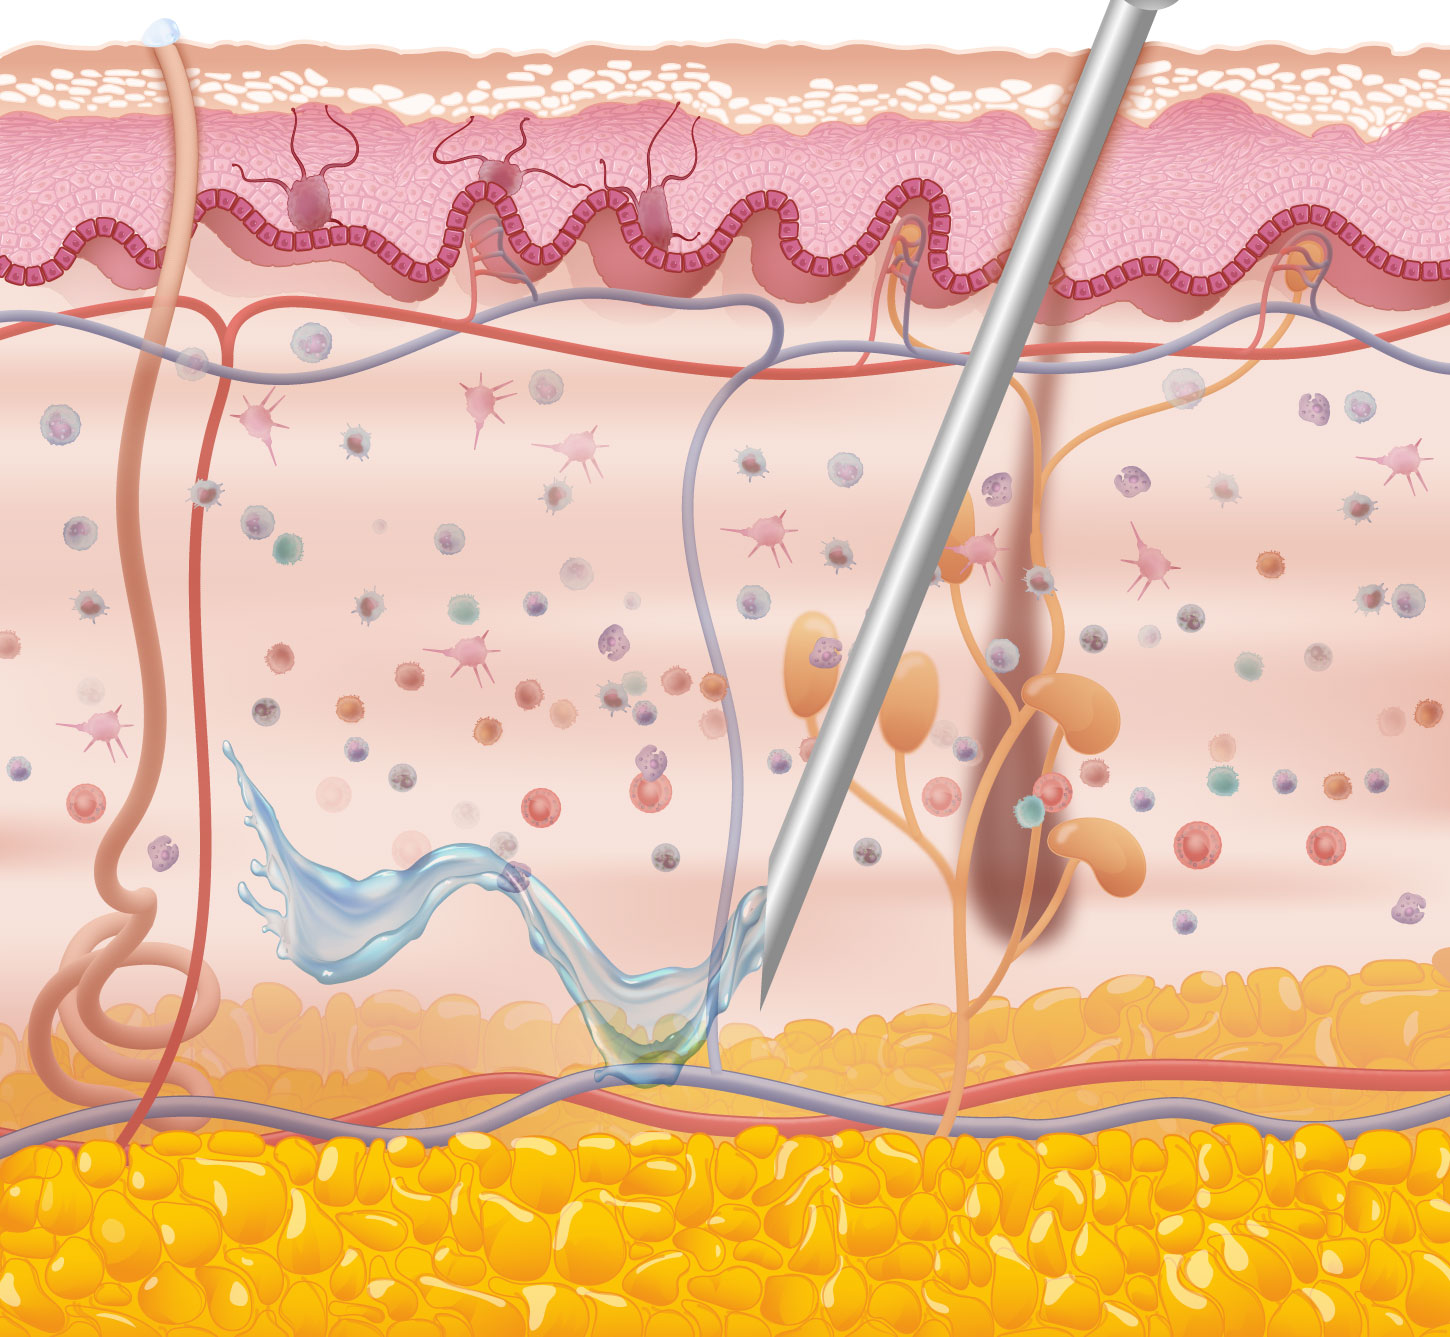 Human skin and immune cells illustration